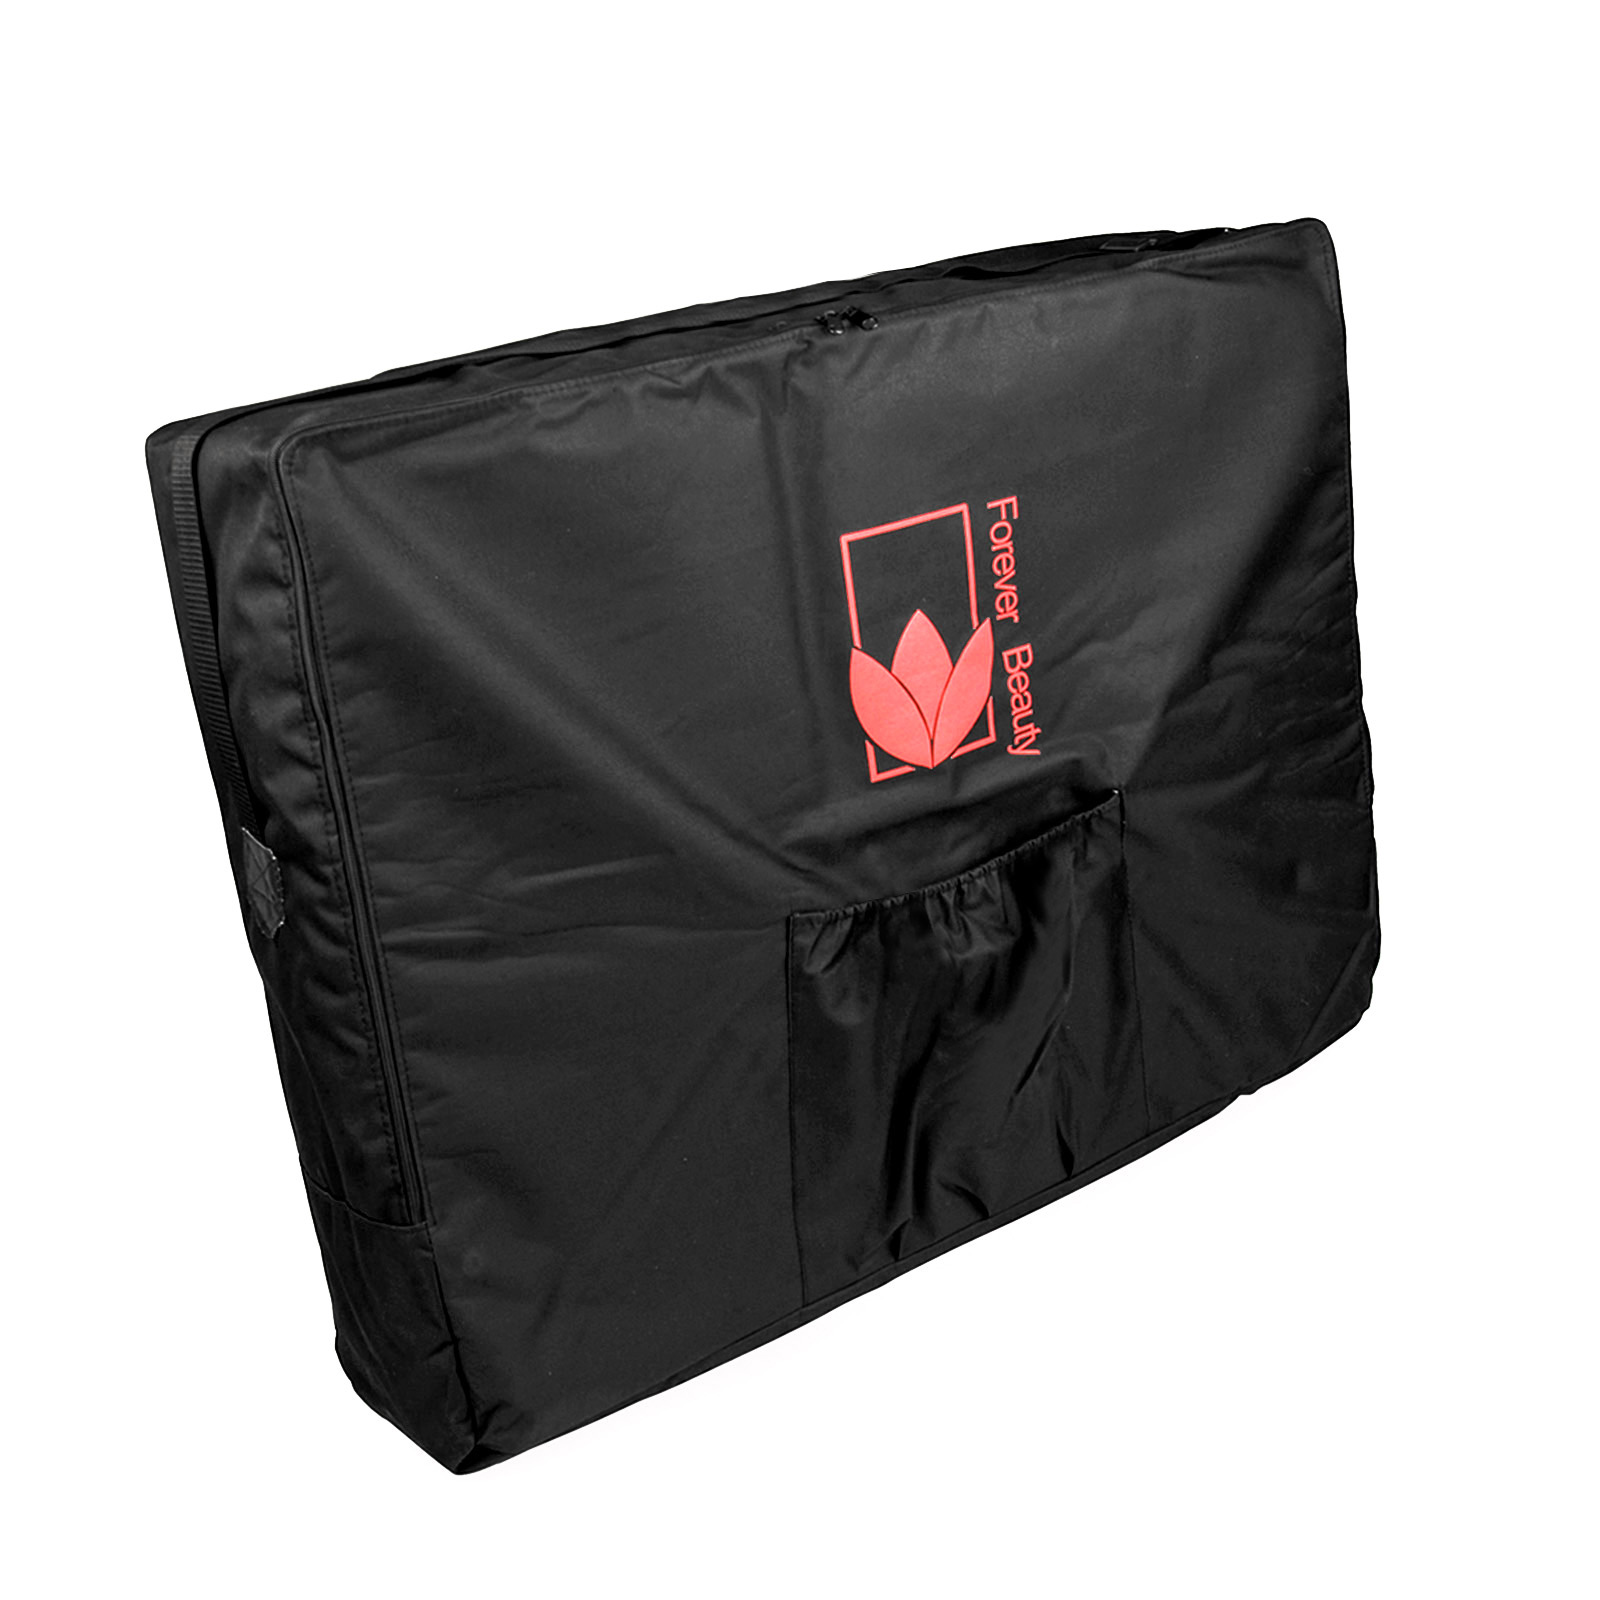 75cm Massage Table Carry Bag - BLACK